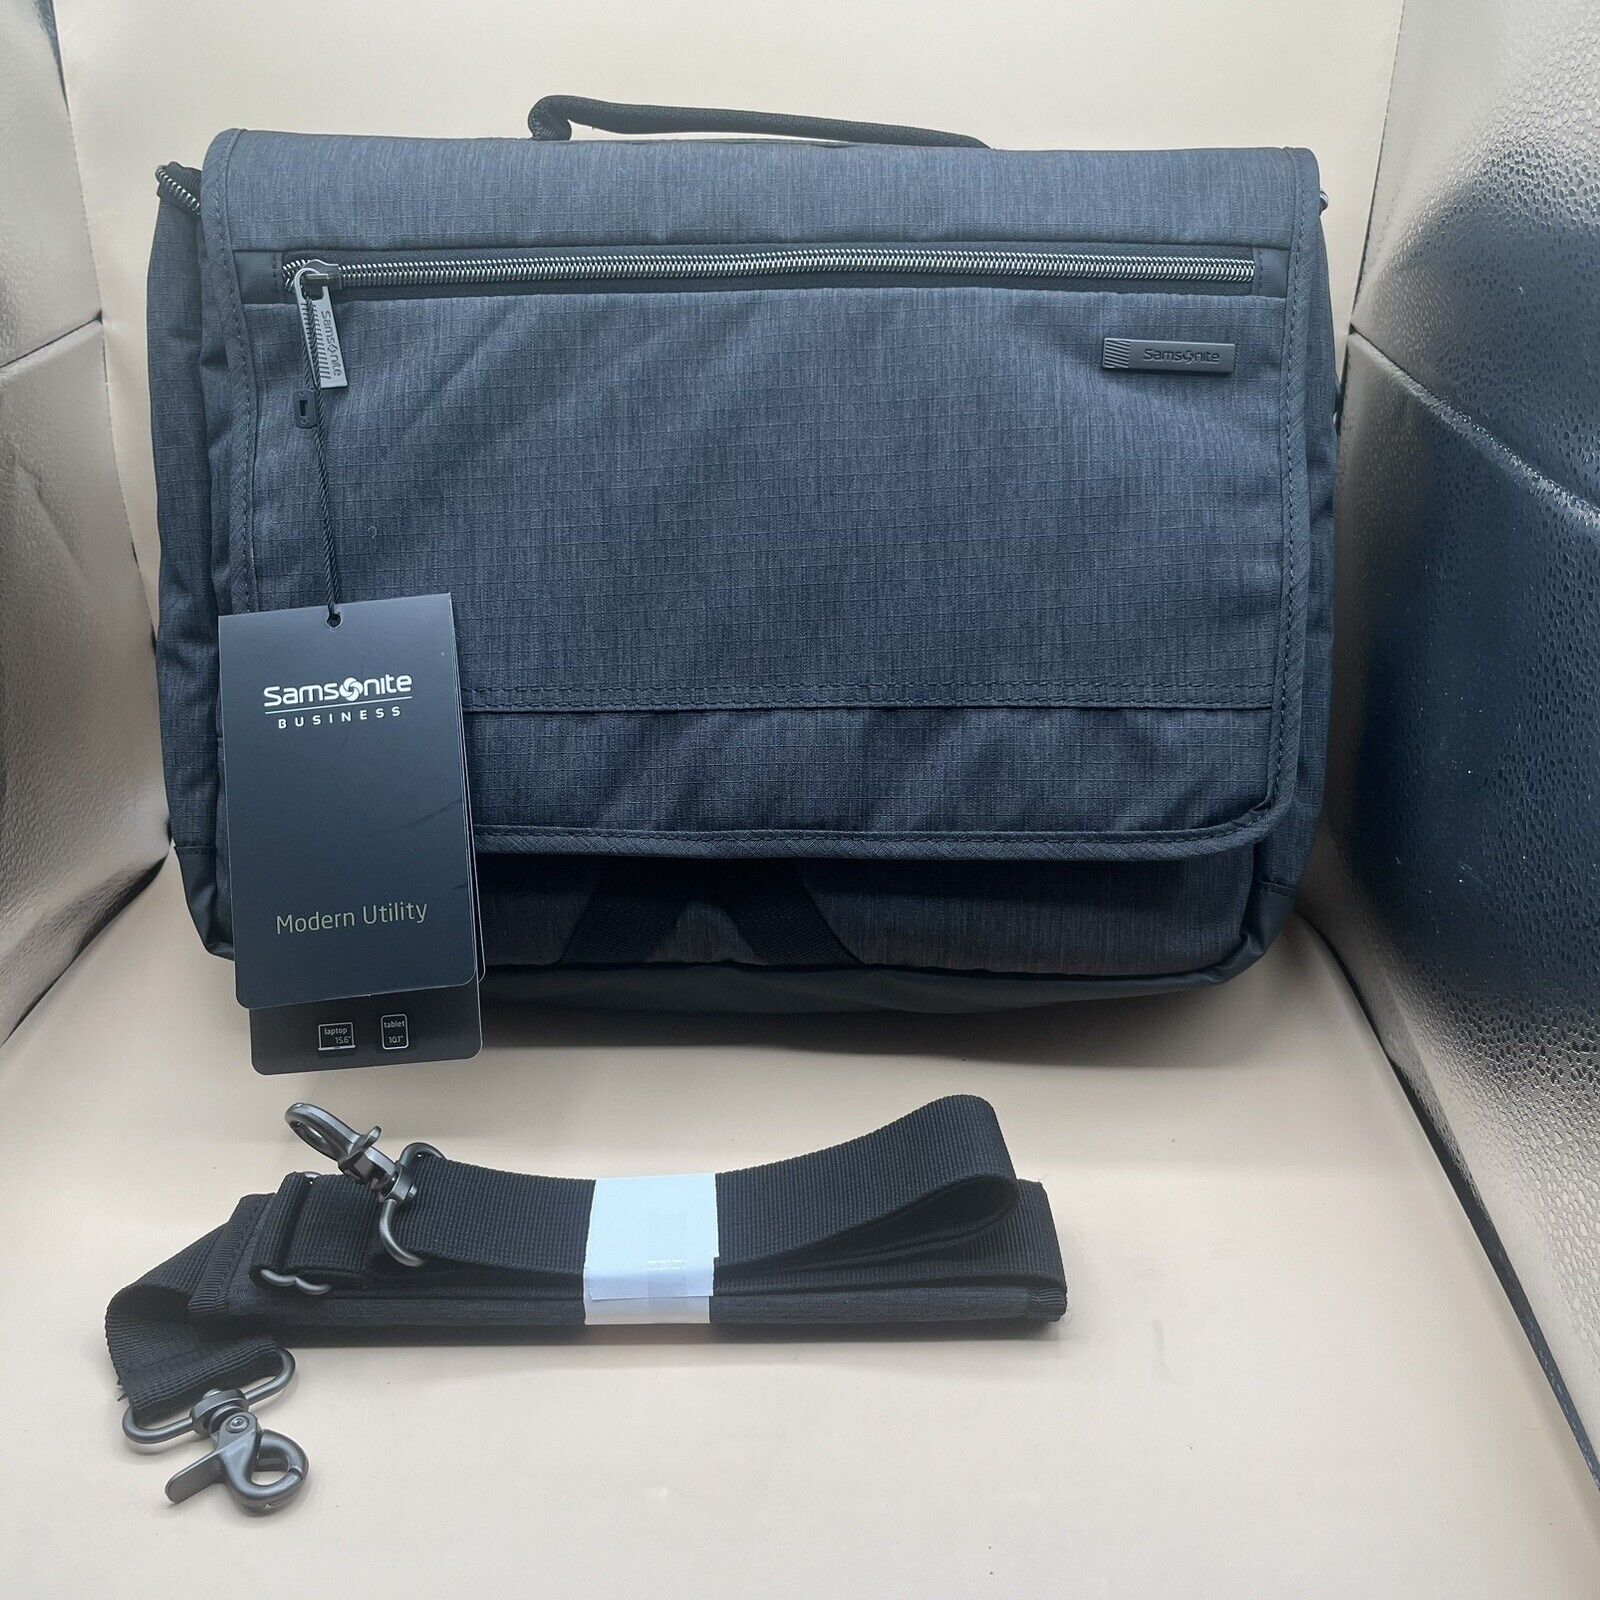 Samsonite Modern Utility Messenger Bag Charcoal heather NEW